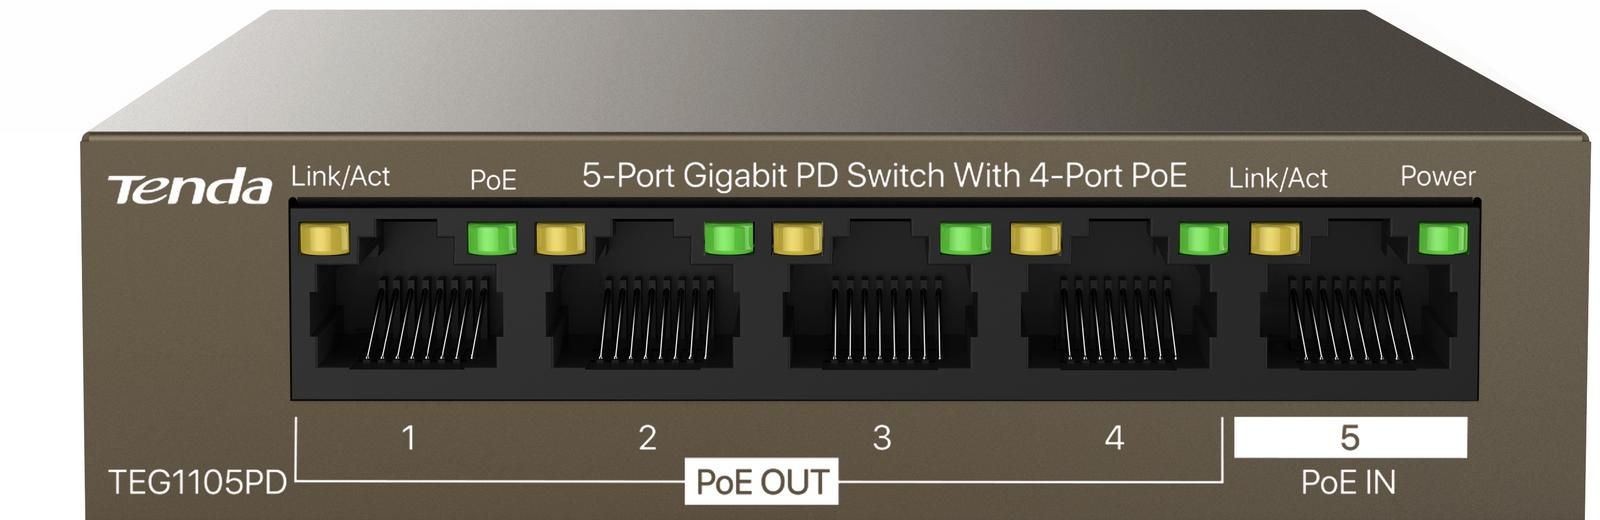 Tenda 5-Port Gigabit PD switch, 4 port POE TEG1105PD, Network standard: IEEE 802.3, IEEE 802.3u, IEEE 802.3x, IEEE 802.3ab, IEEE 802.3af, IEEE 802.3at, Interface: 4*10/100/1000 Base-T Ethernet Ports(Data/PoE OUT), 1 *10/100/1000 Base-T Ethernet Port(Data/PoE IN), Switching Capacity: 10 Gbps, PoE_1